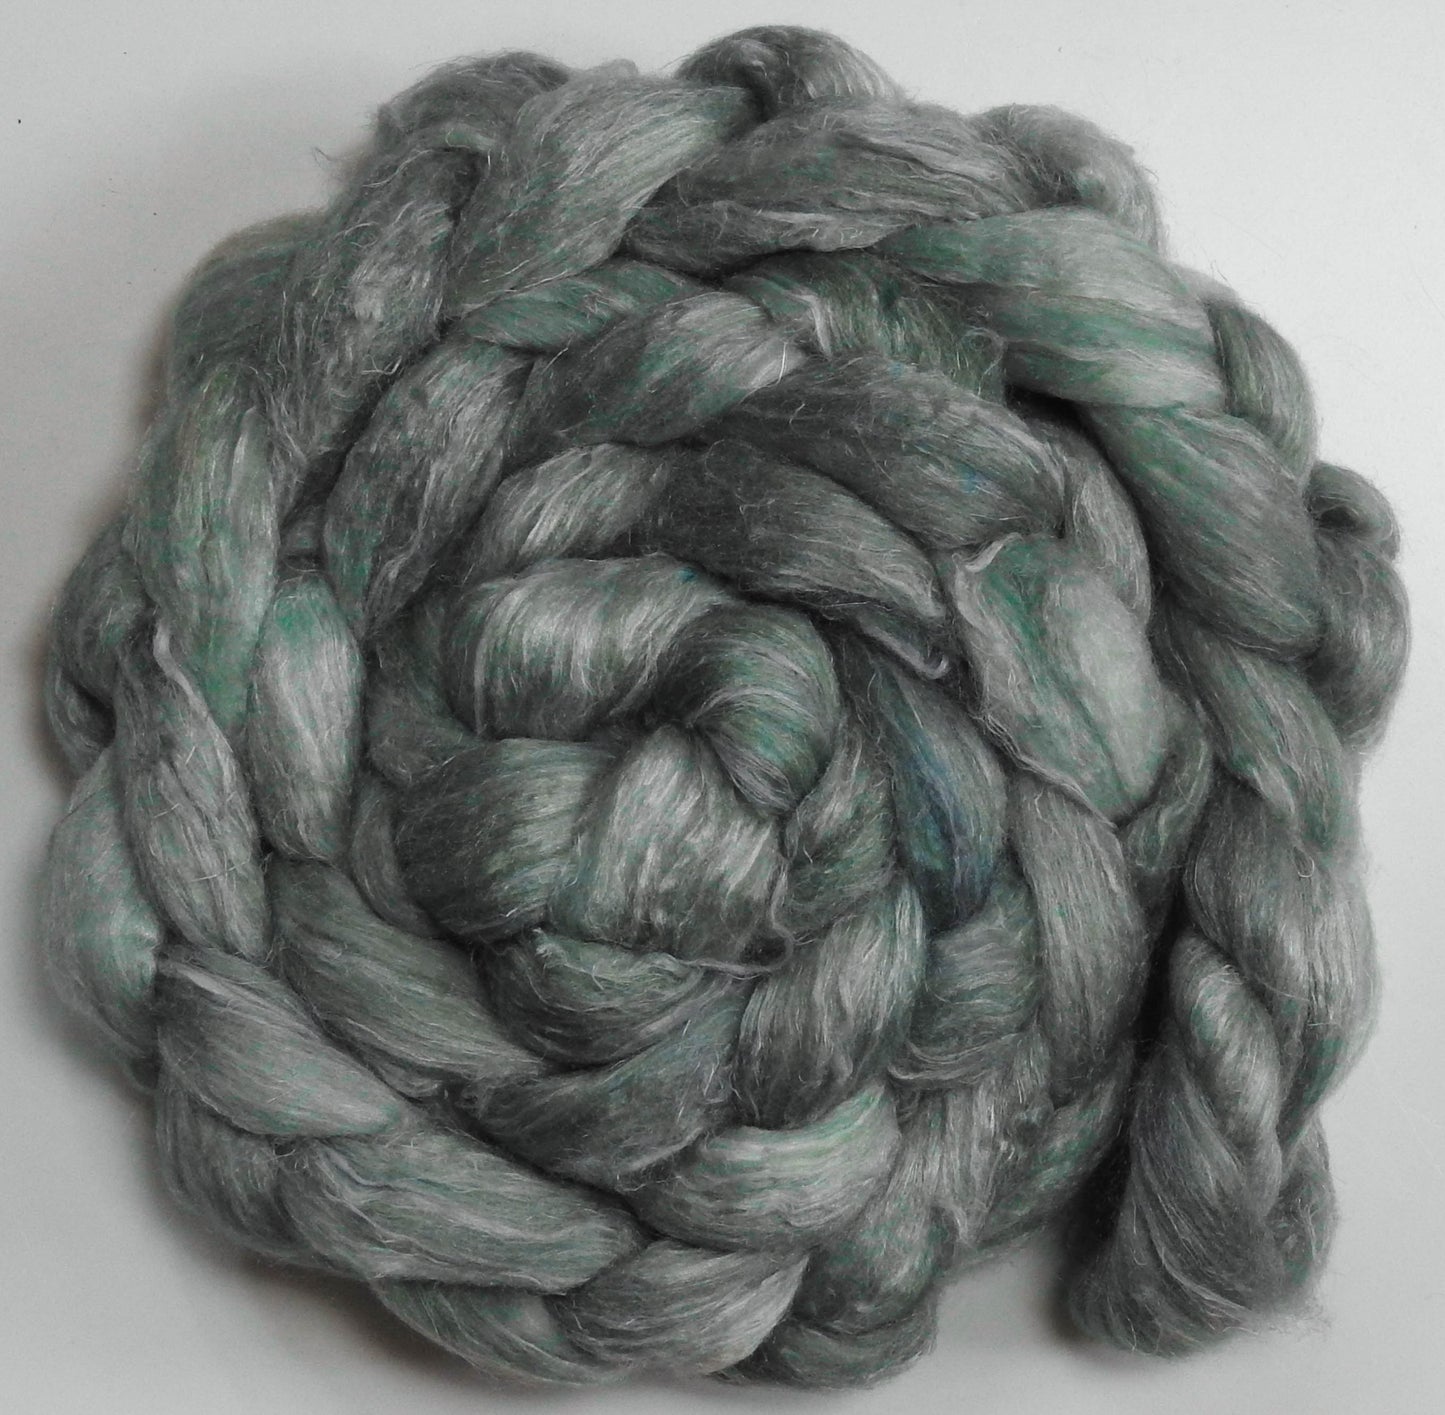 Silver Sage (5.6 oz) - Batt in a Braid #29 - Rambouillet / Tussah / Flax (40/40/20)